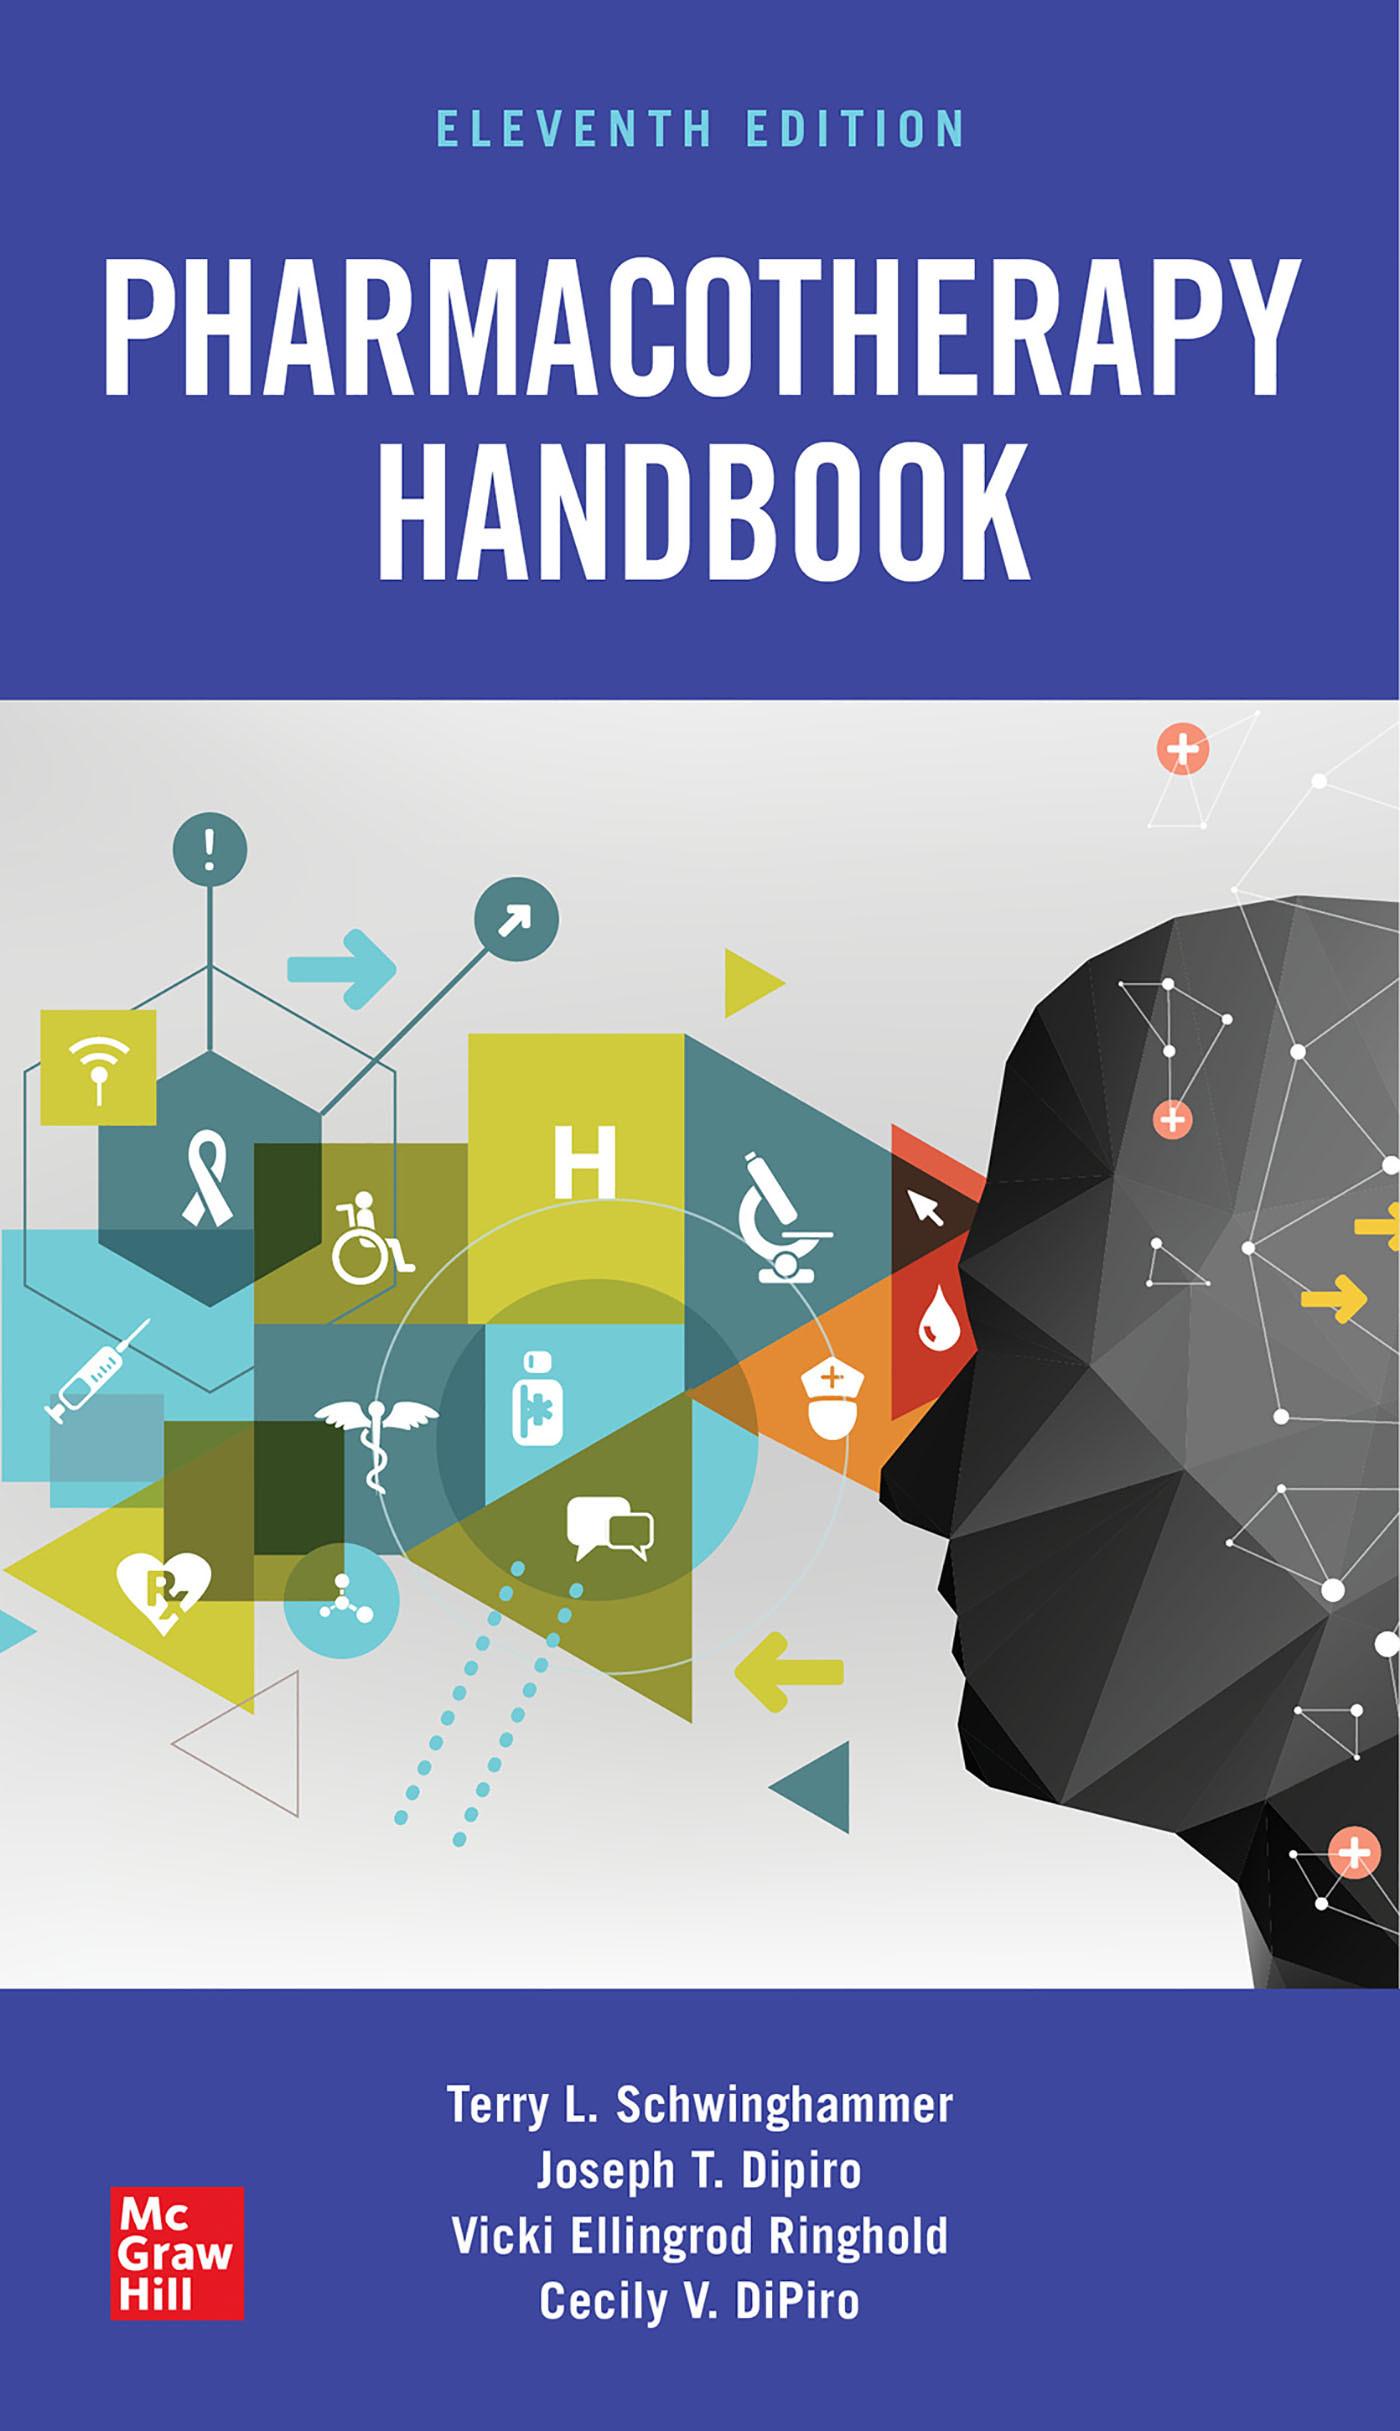 Pharmacotherapy Handbook 11th Edition